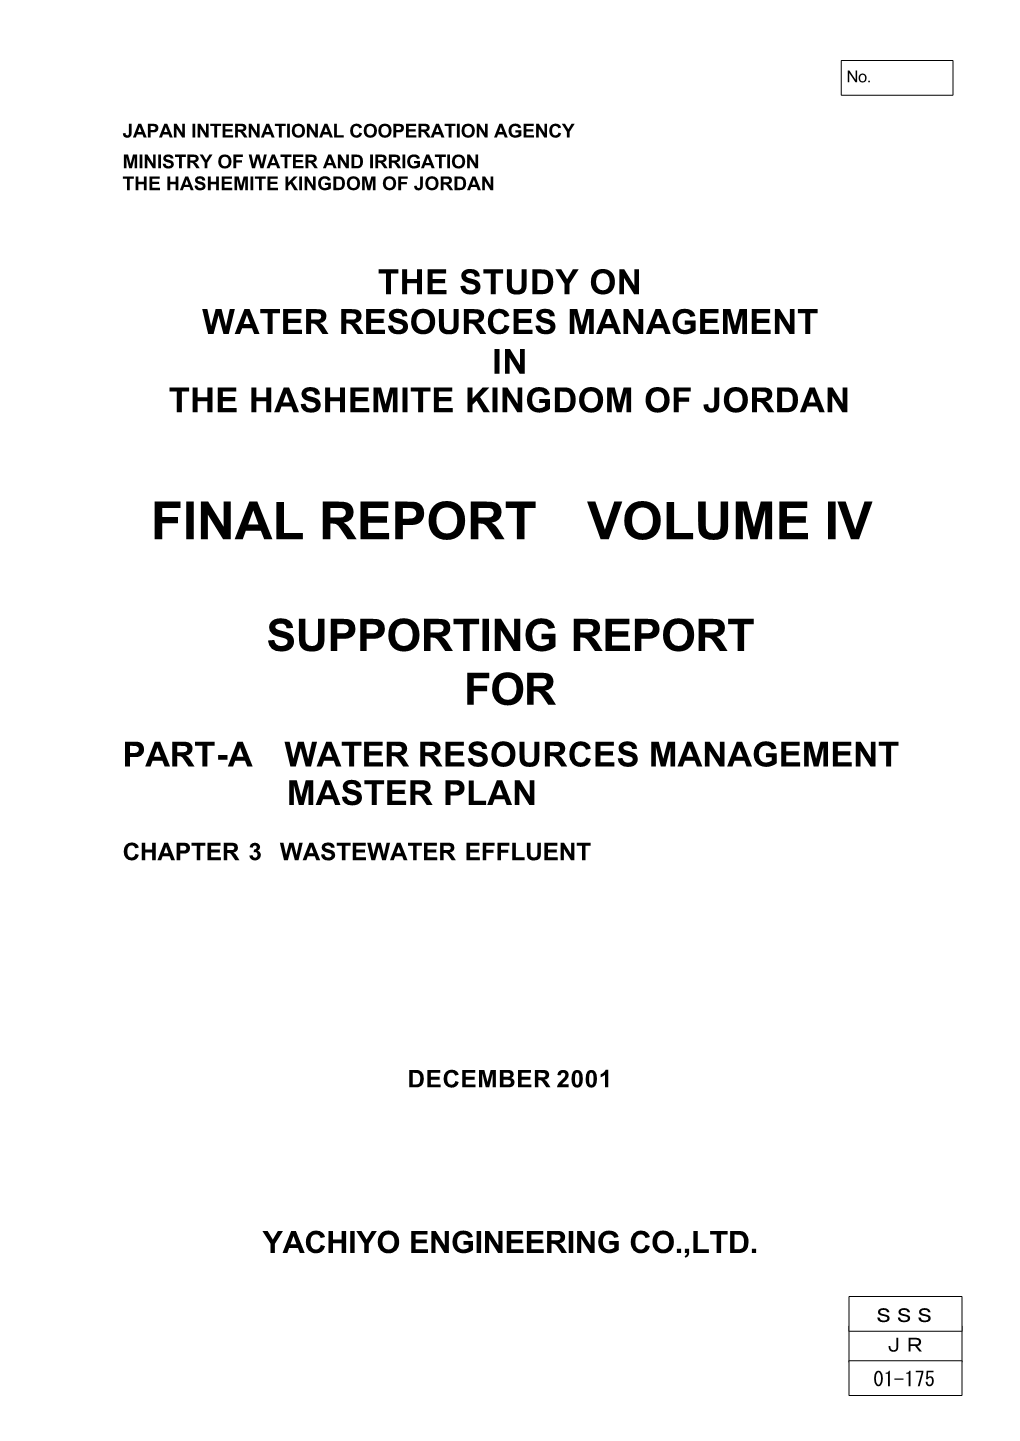 Final Report Volume Iv